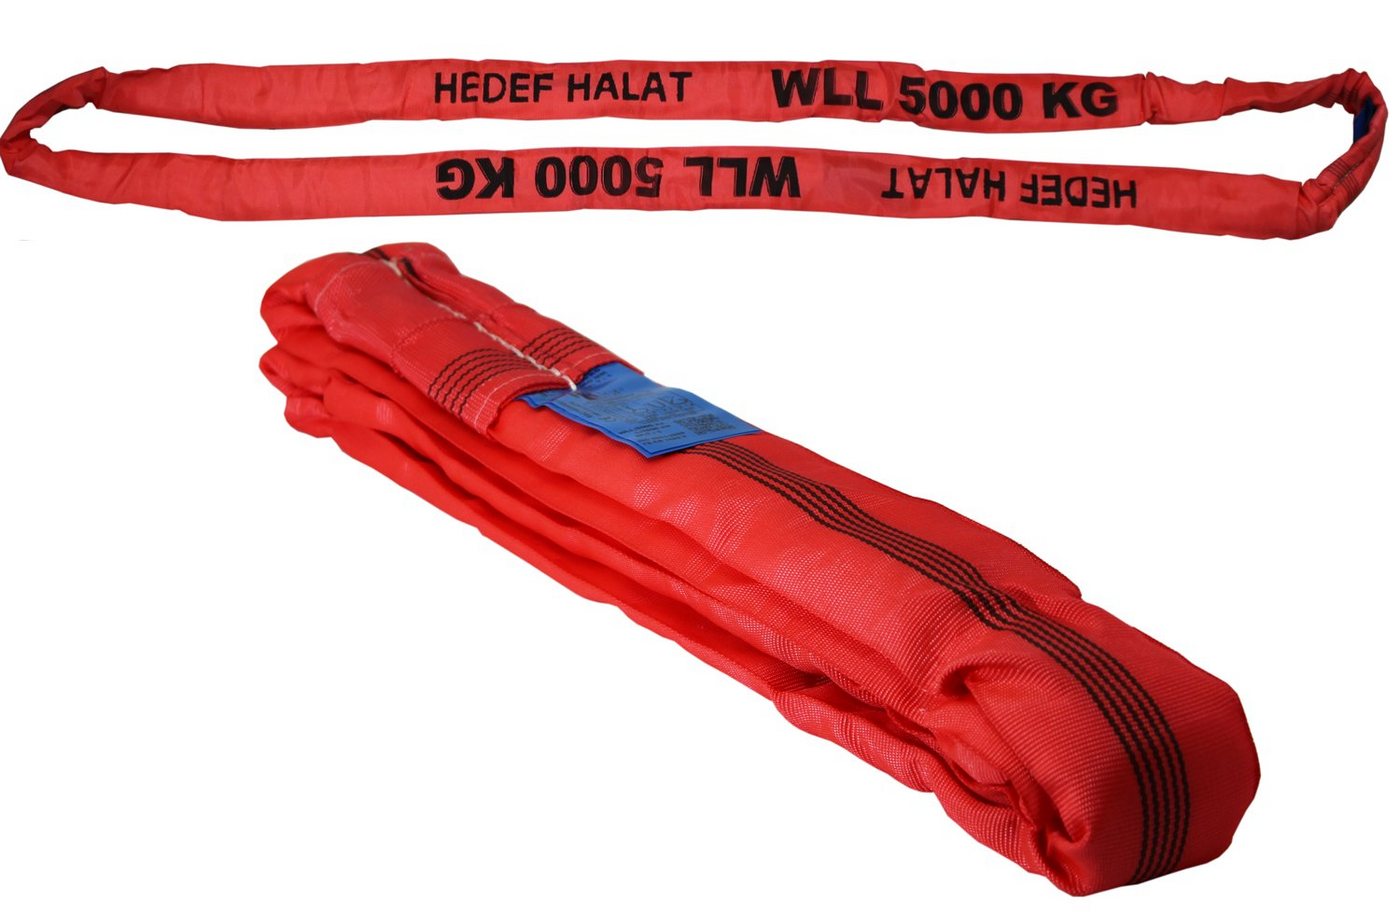 HEDEF HALAT Rundschlinge mit Einfachmantel 5 Tonnen 8 Meter SF: 7/1 DIN EN 1492-2 Hebeband, Rundschlingen Bandschlinge Hebegurt 8 m (umfang 16 m) von HEDEF HALAT